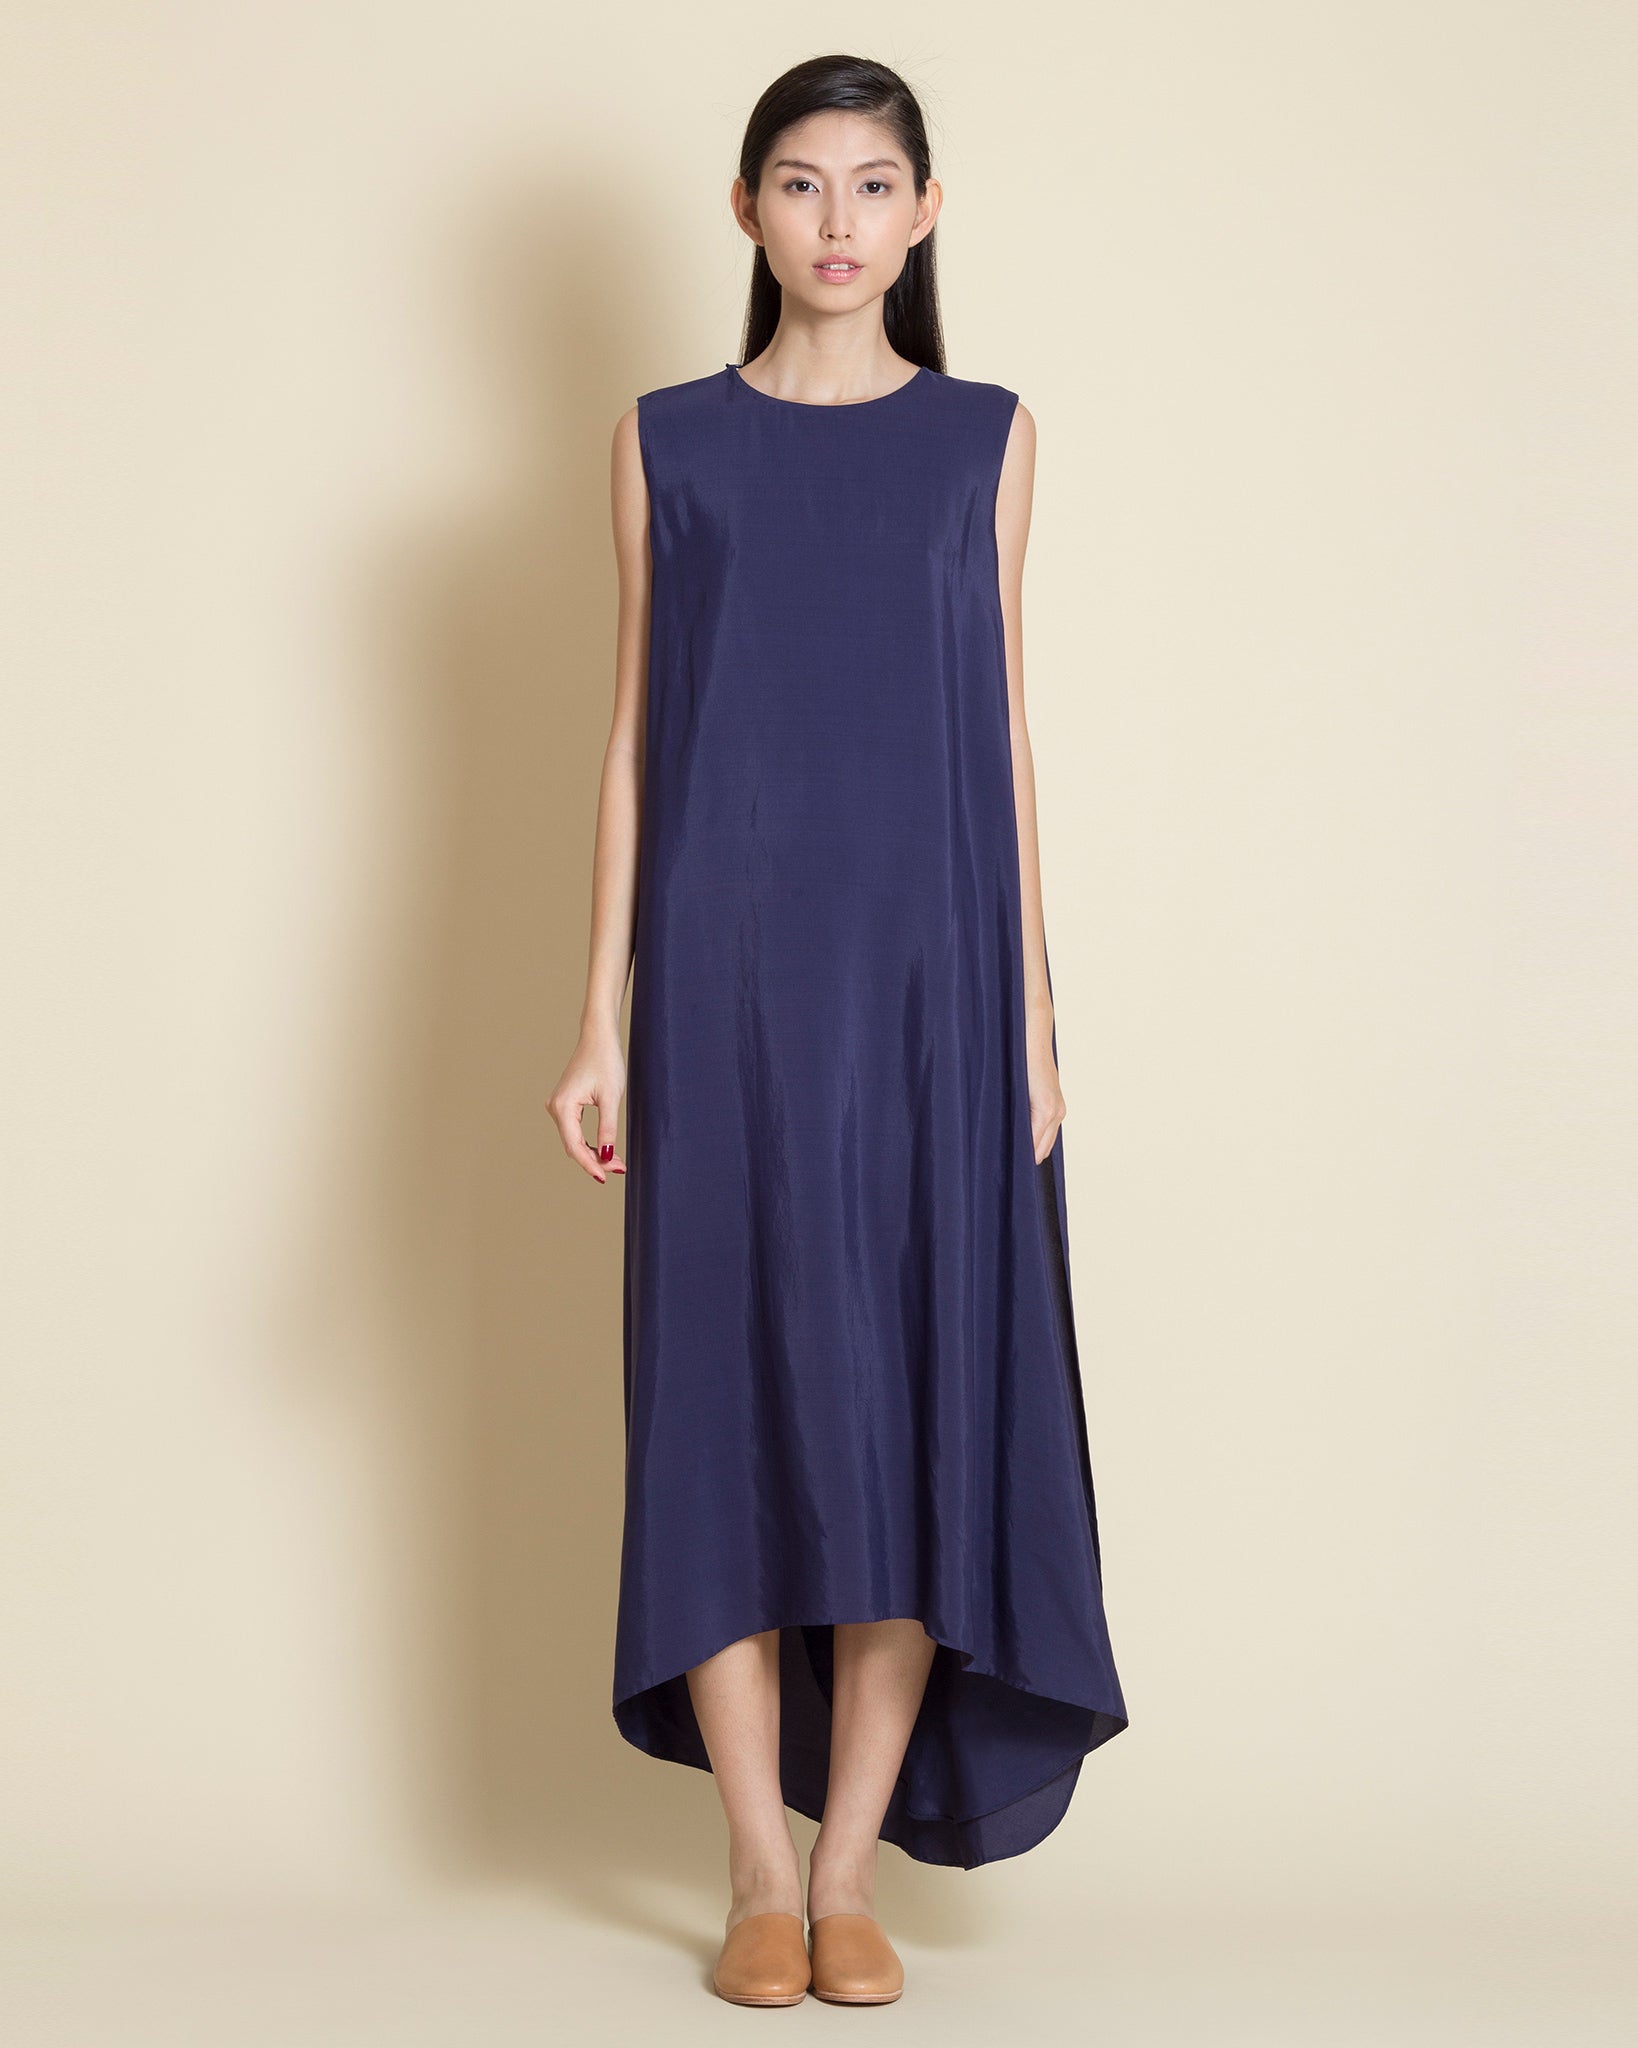 KAAREM - Turn Sleeveless Overlap Maxi Dress - Space Blue